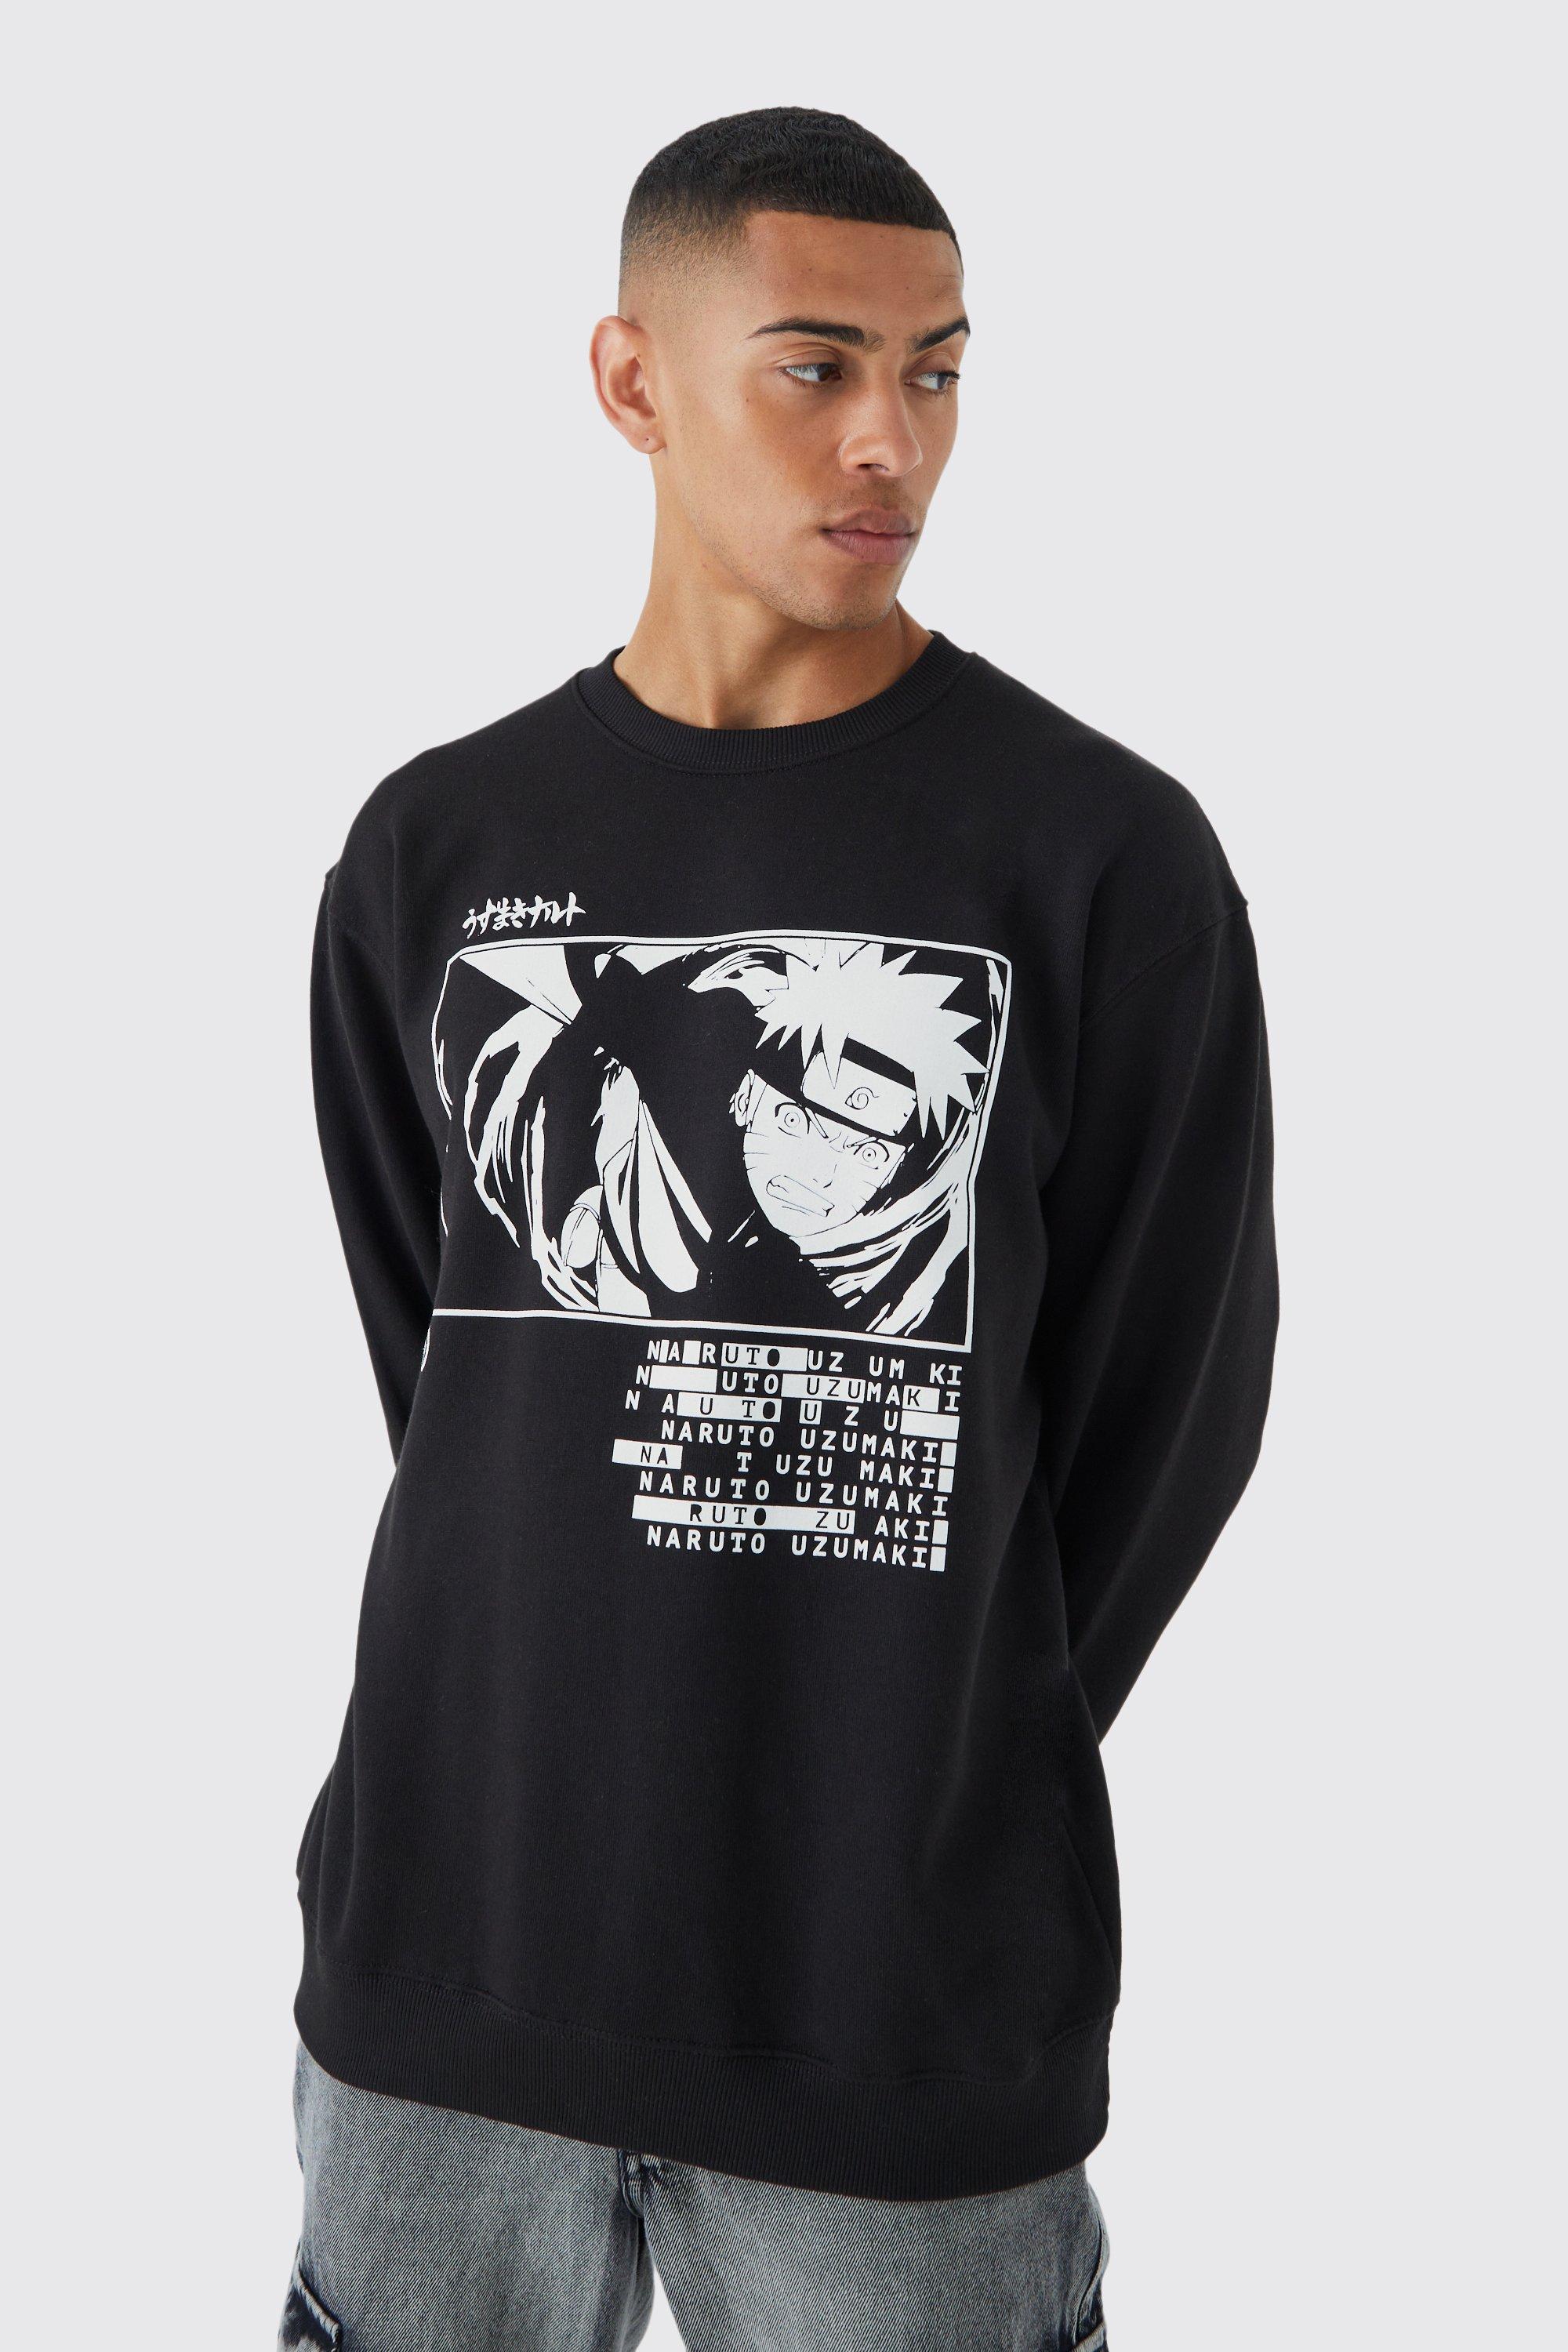 BoohooMAN Oversized Naruto Anime License Sweatshirt in Black for